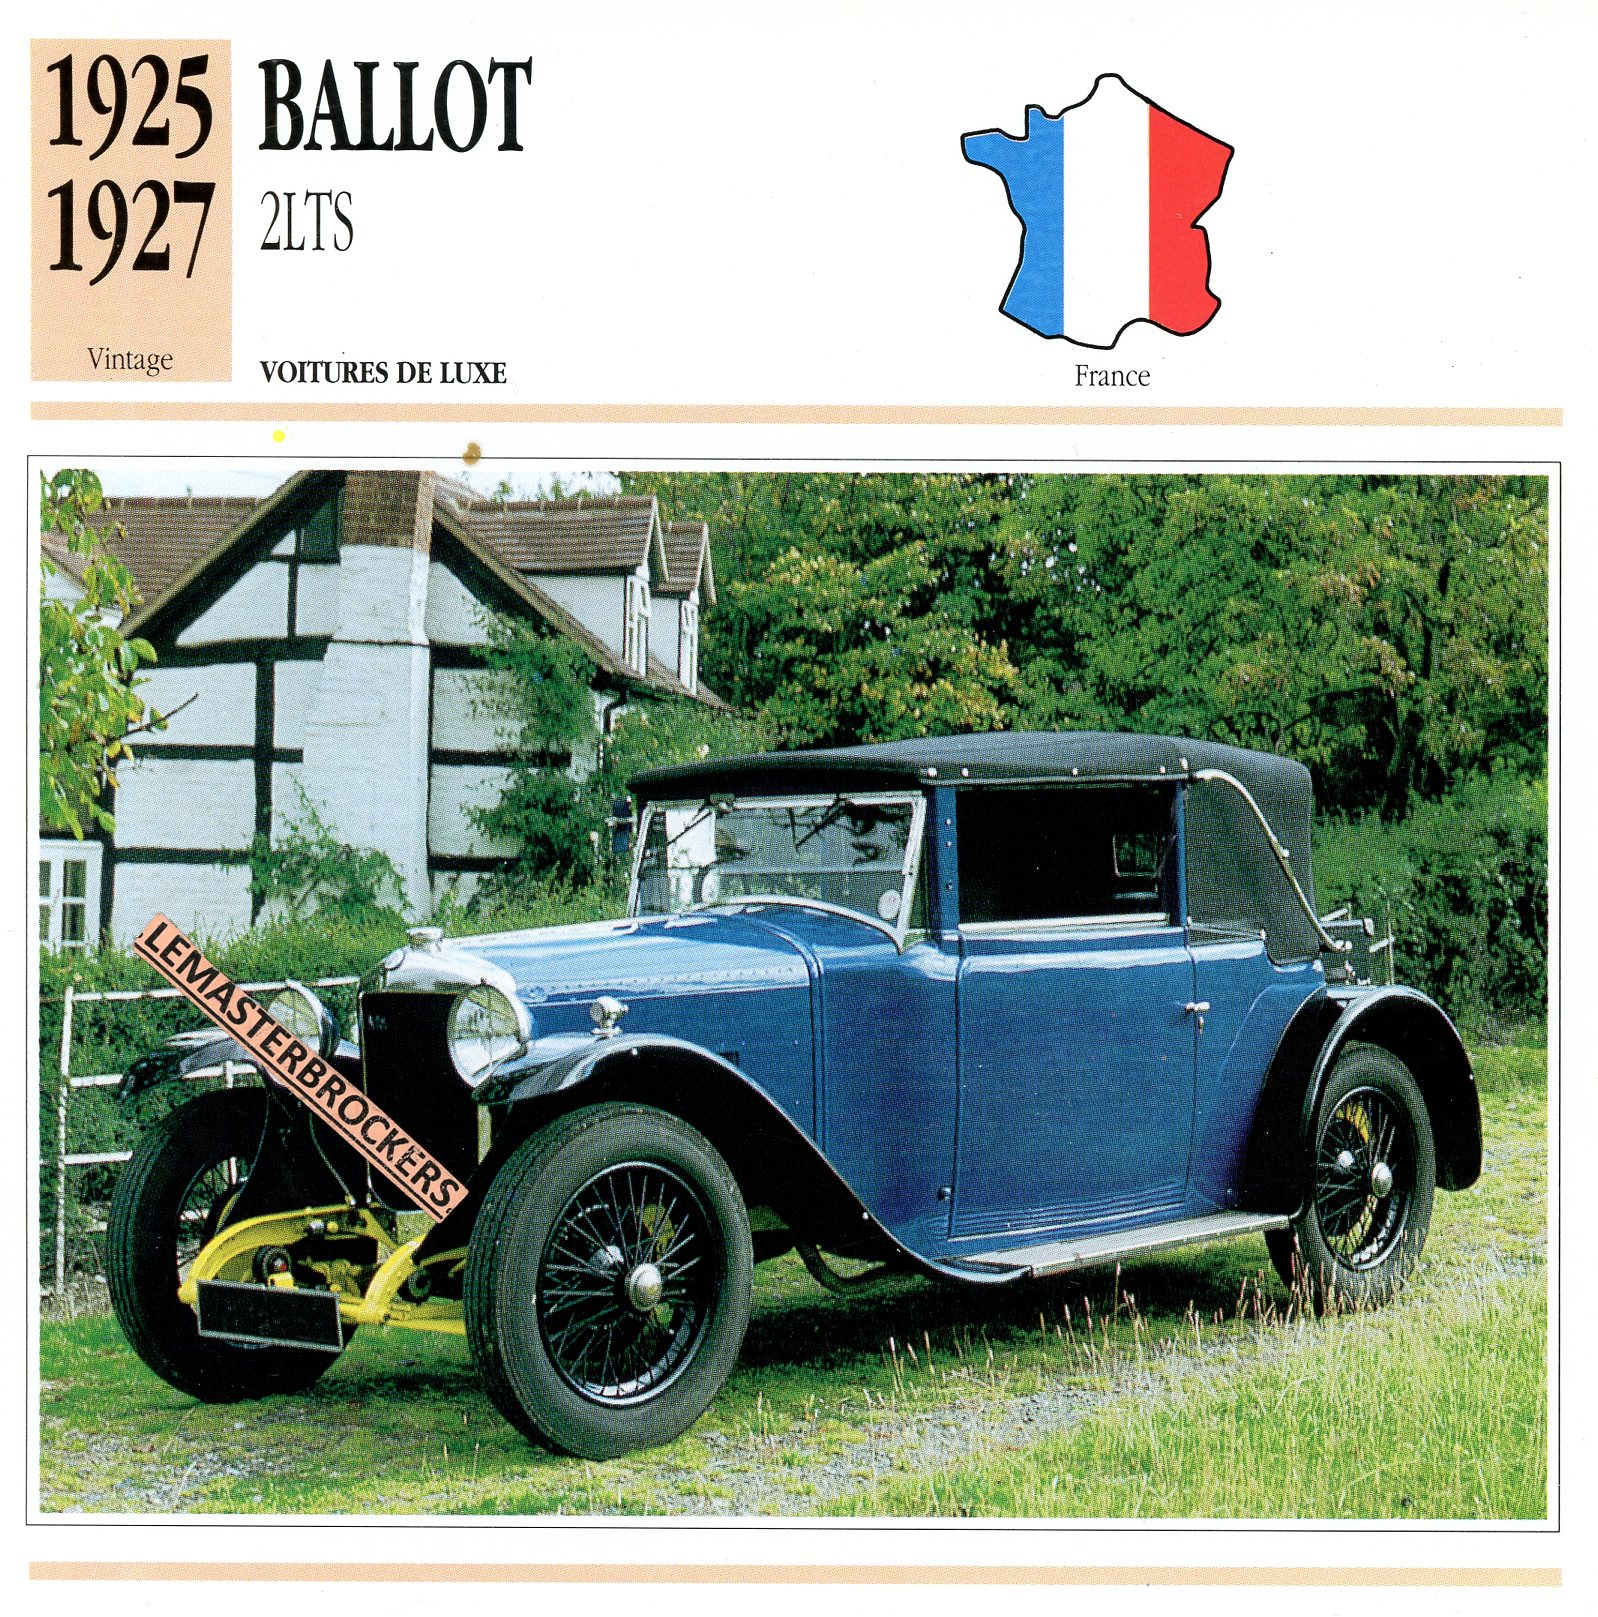 BALLOT-2-LTS-1925-LEMASTERBROCKERS-CARS-CARD-FICHE-AUTO